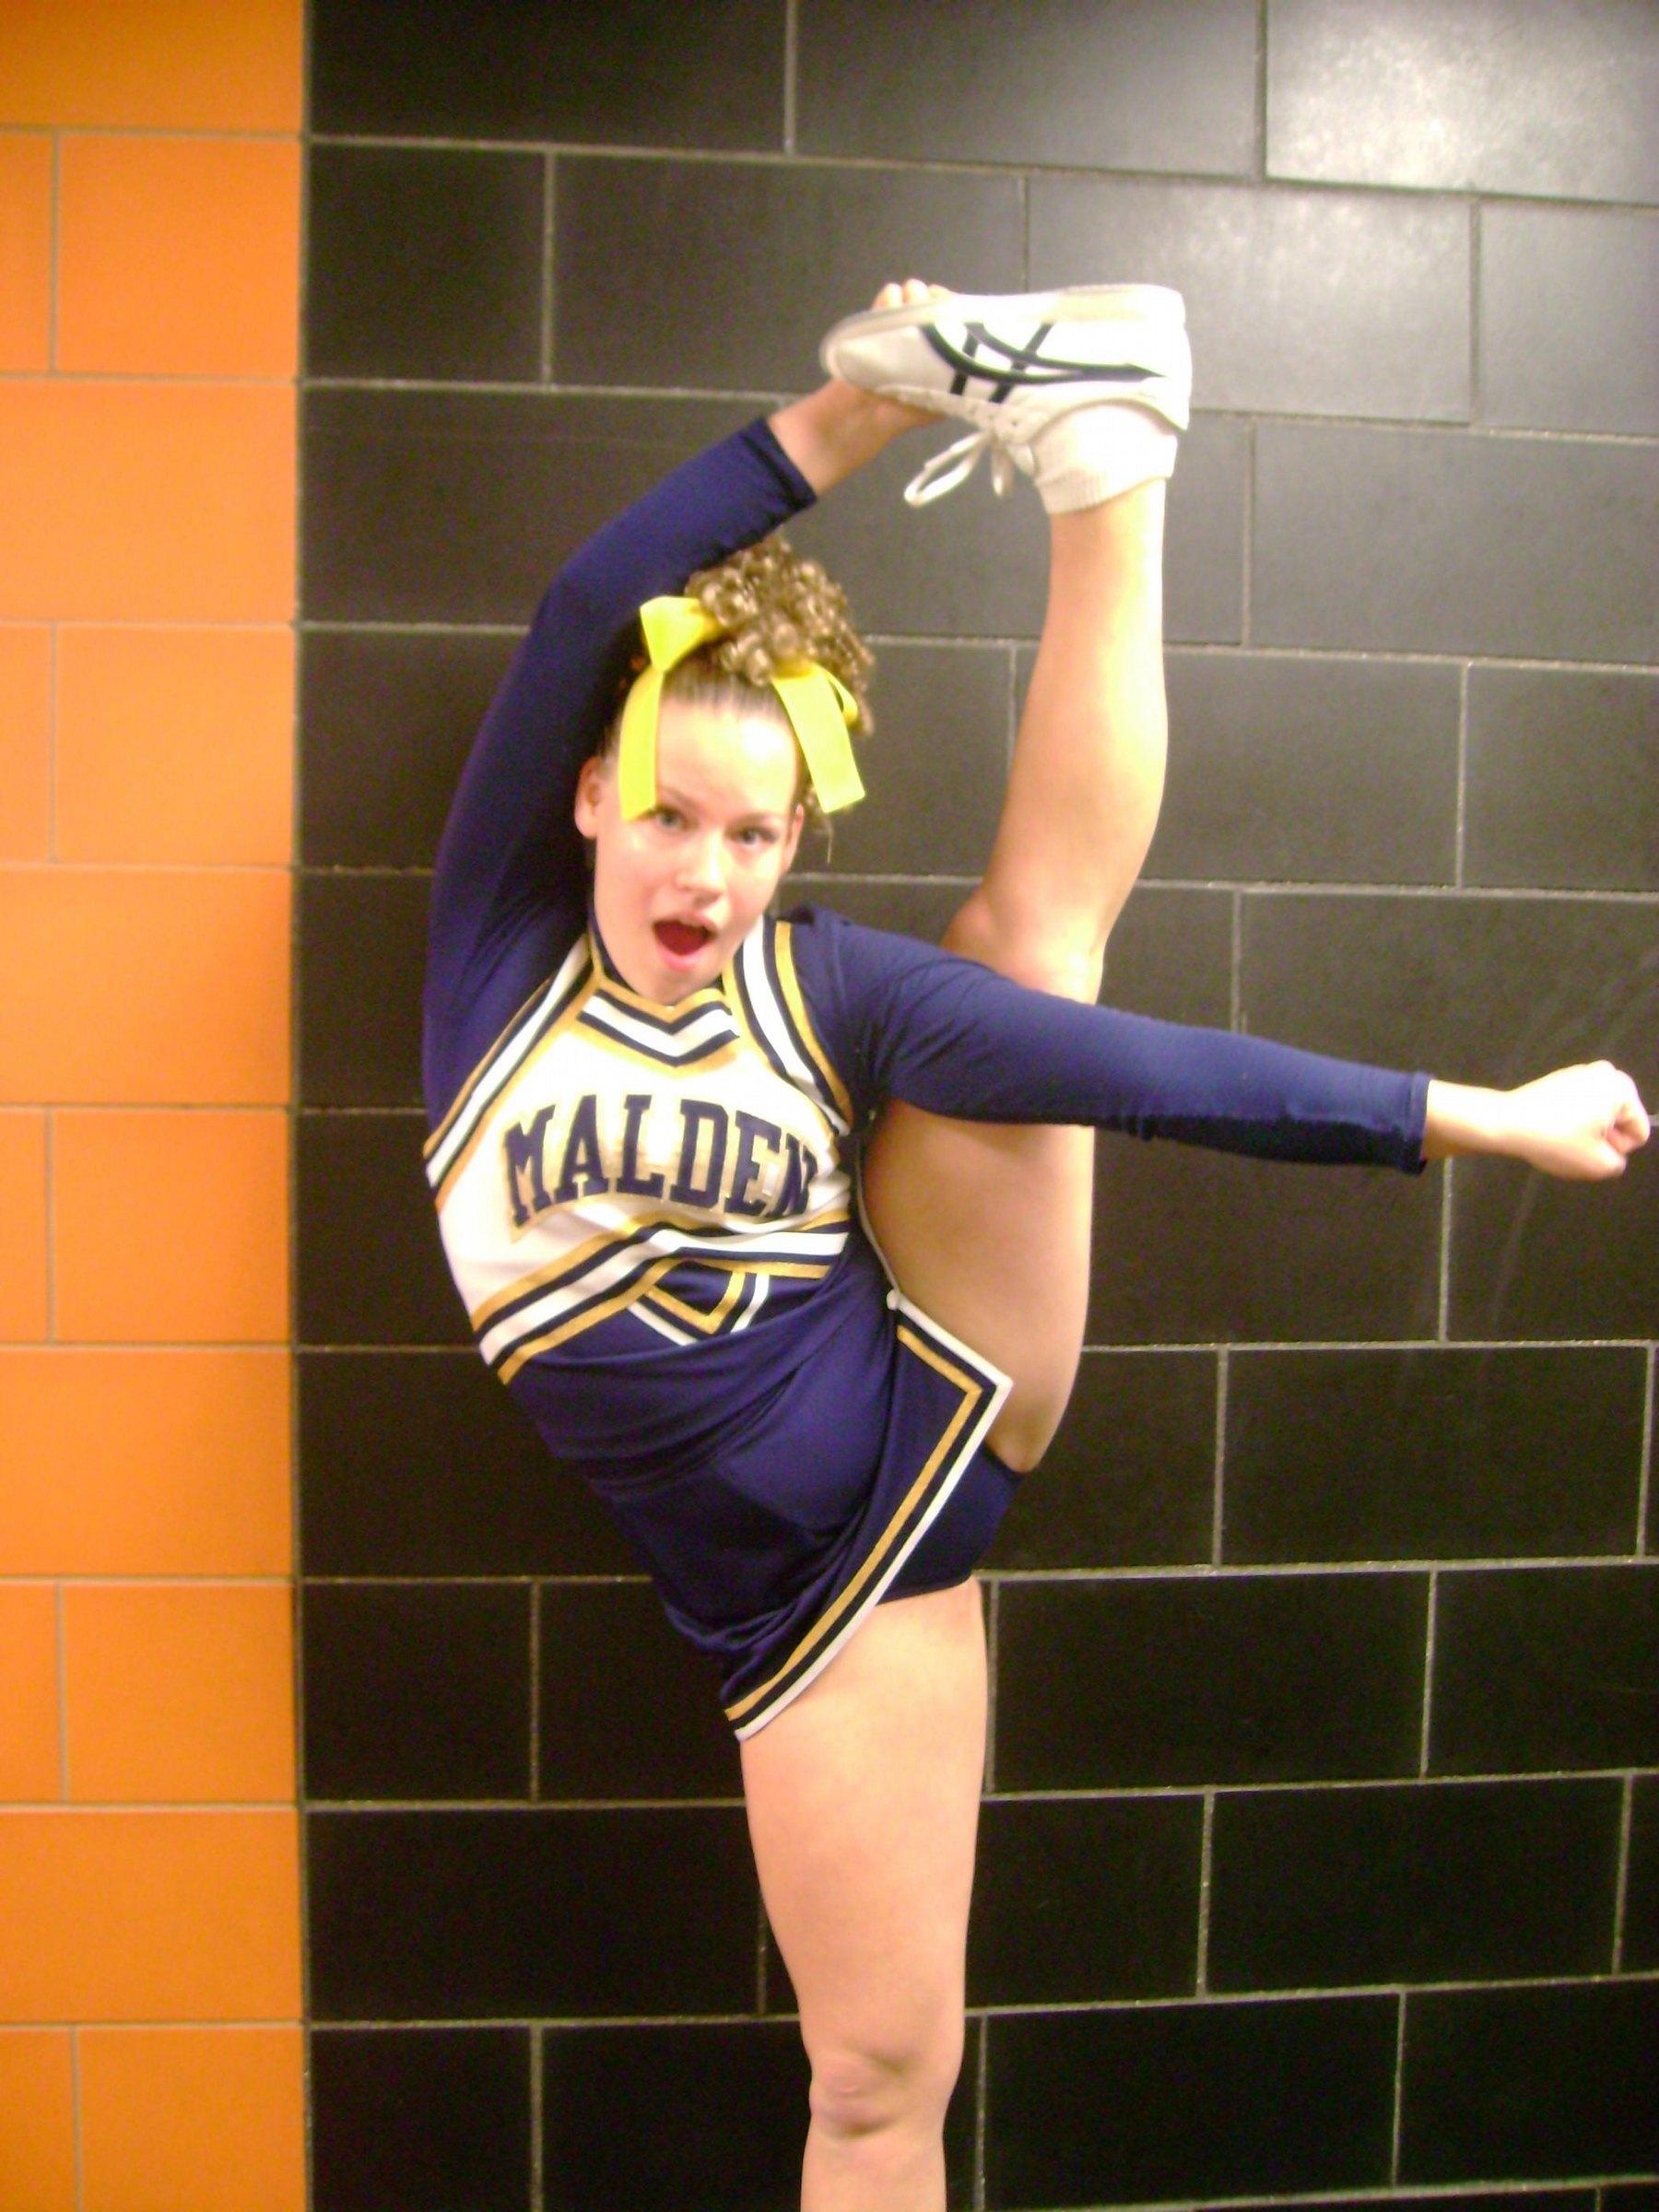 Teen cheerleader upskirt pics